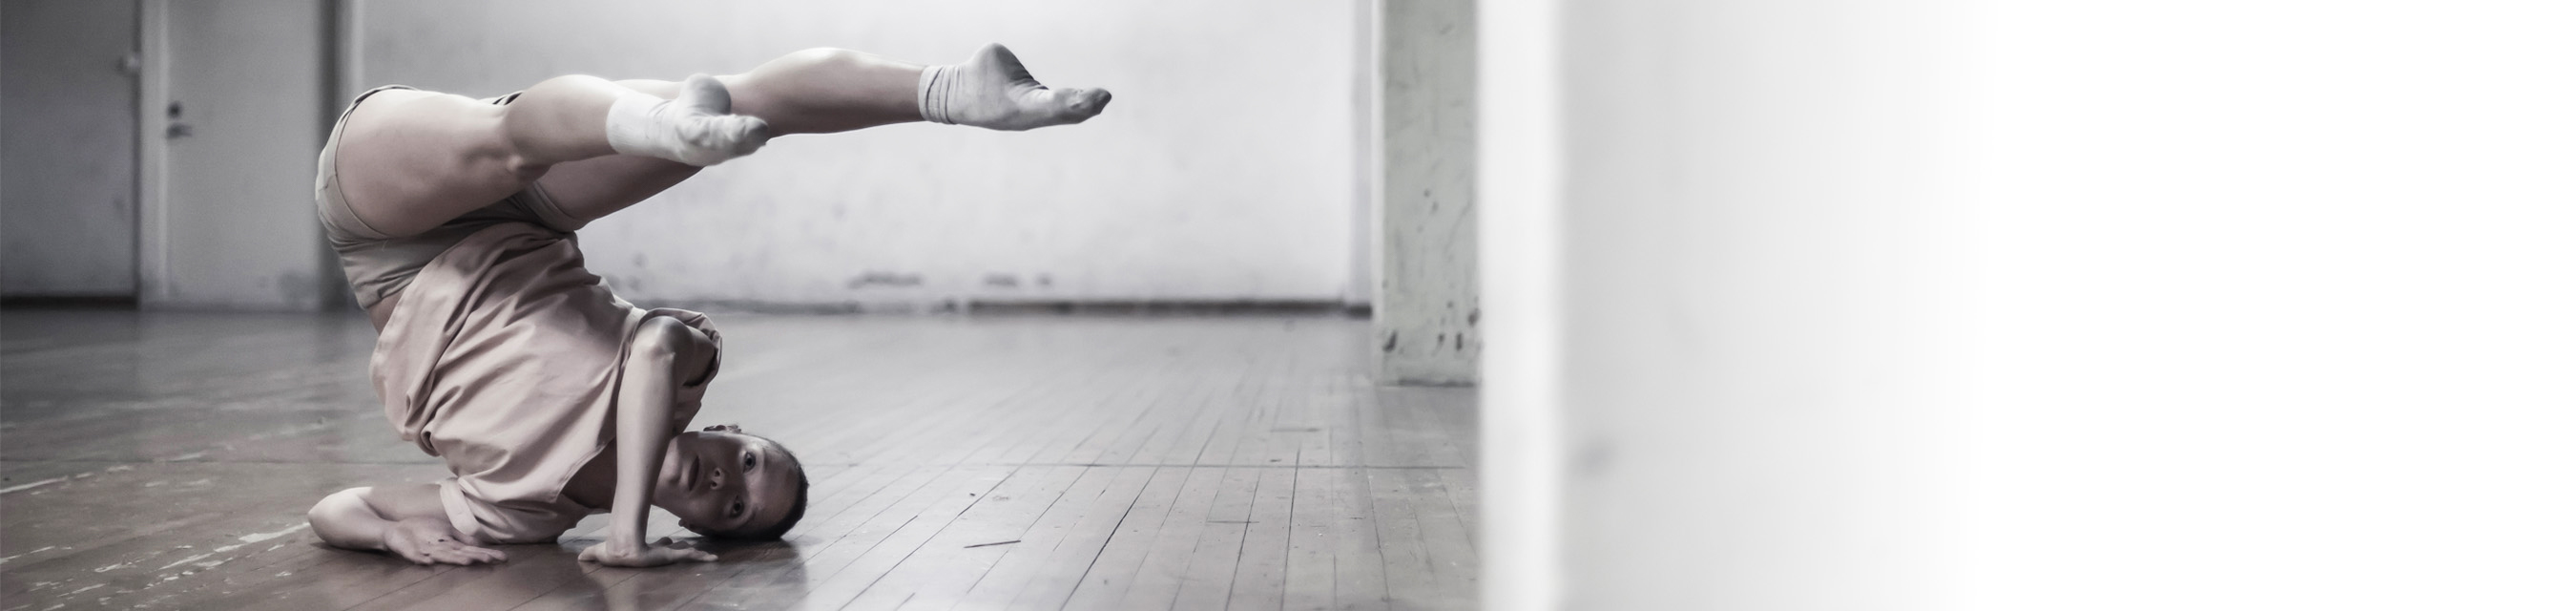 Danselev utför en akrobatisk dansposition i en studio.